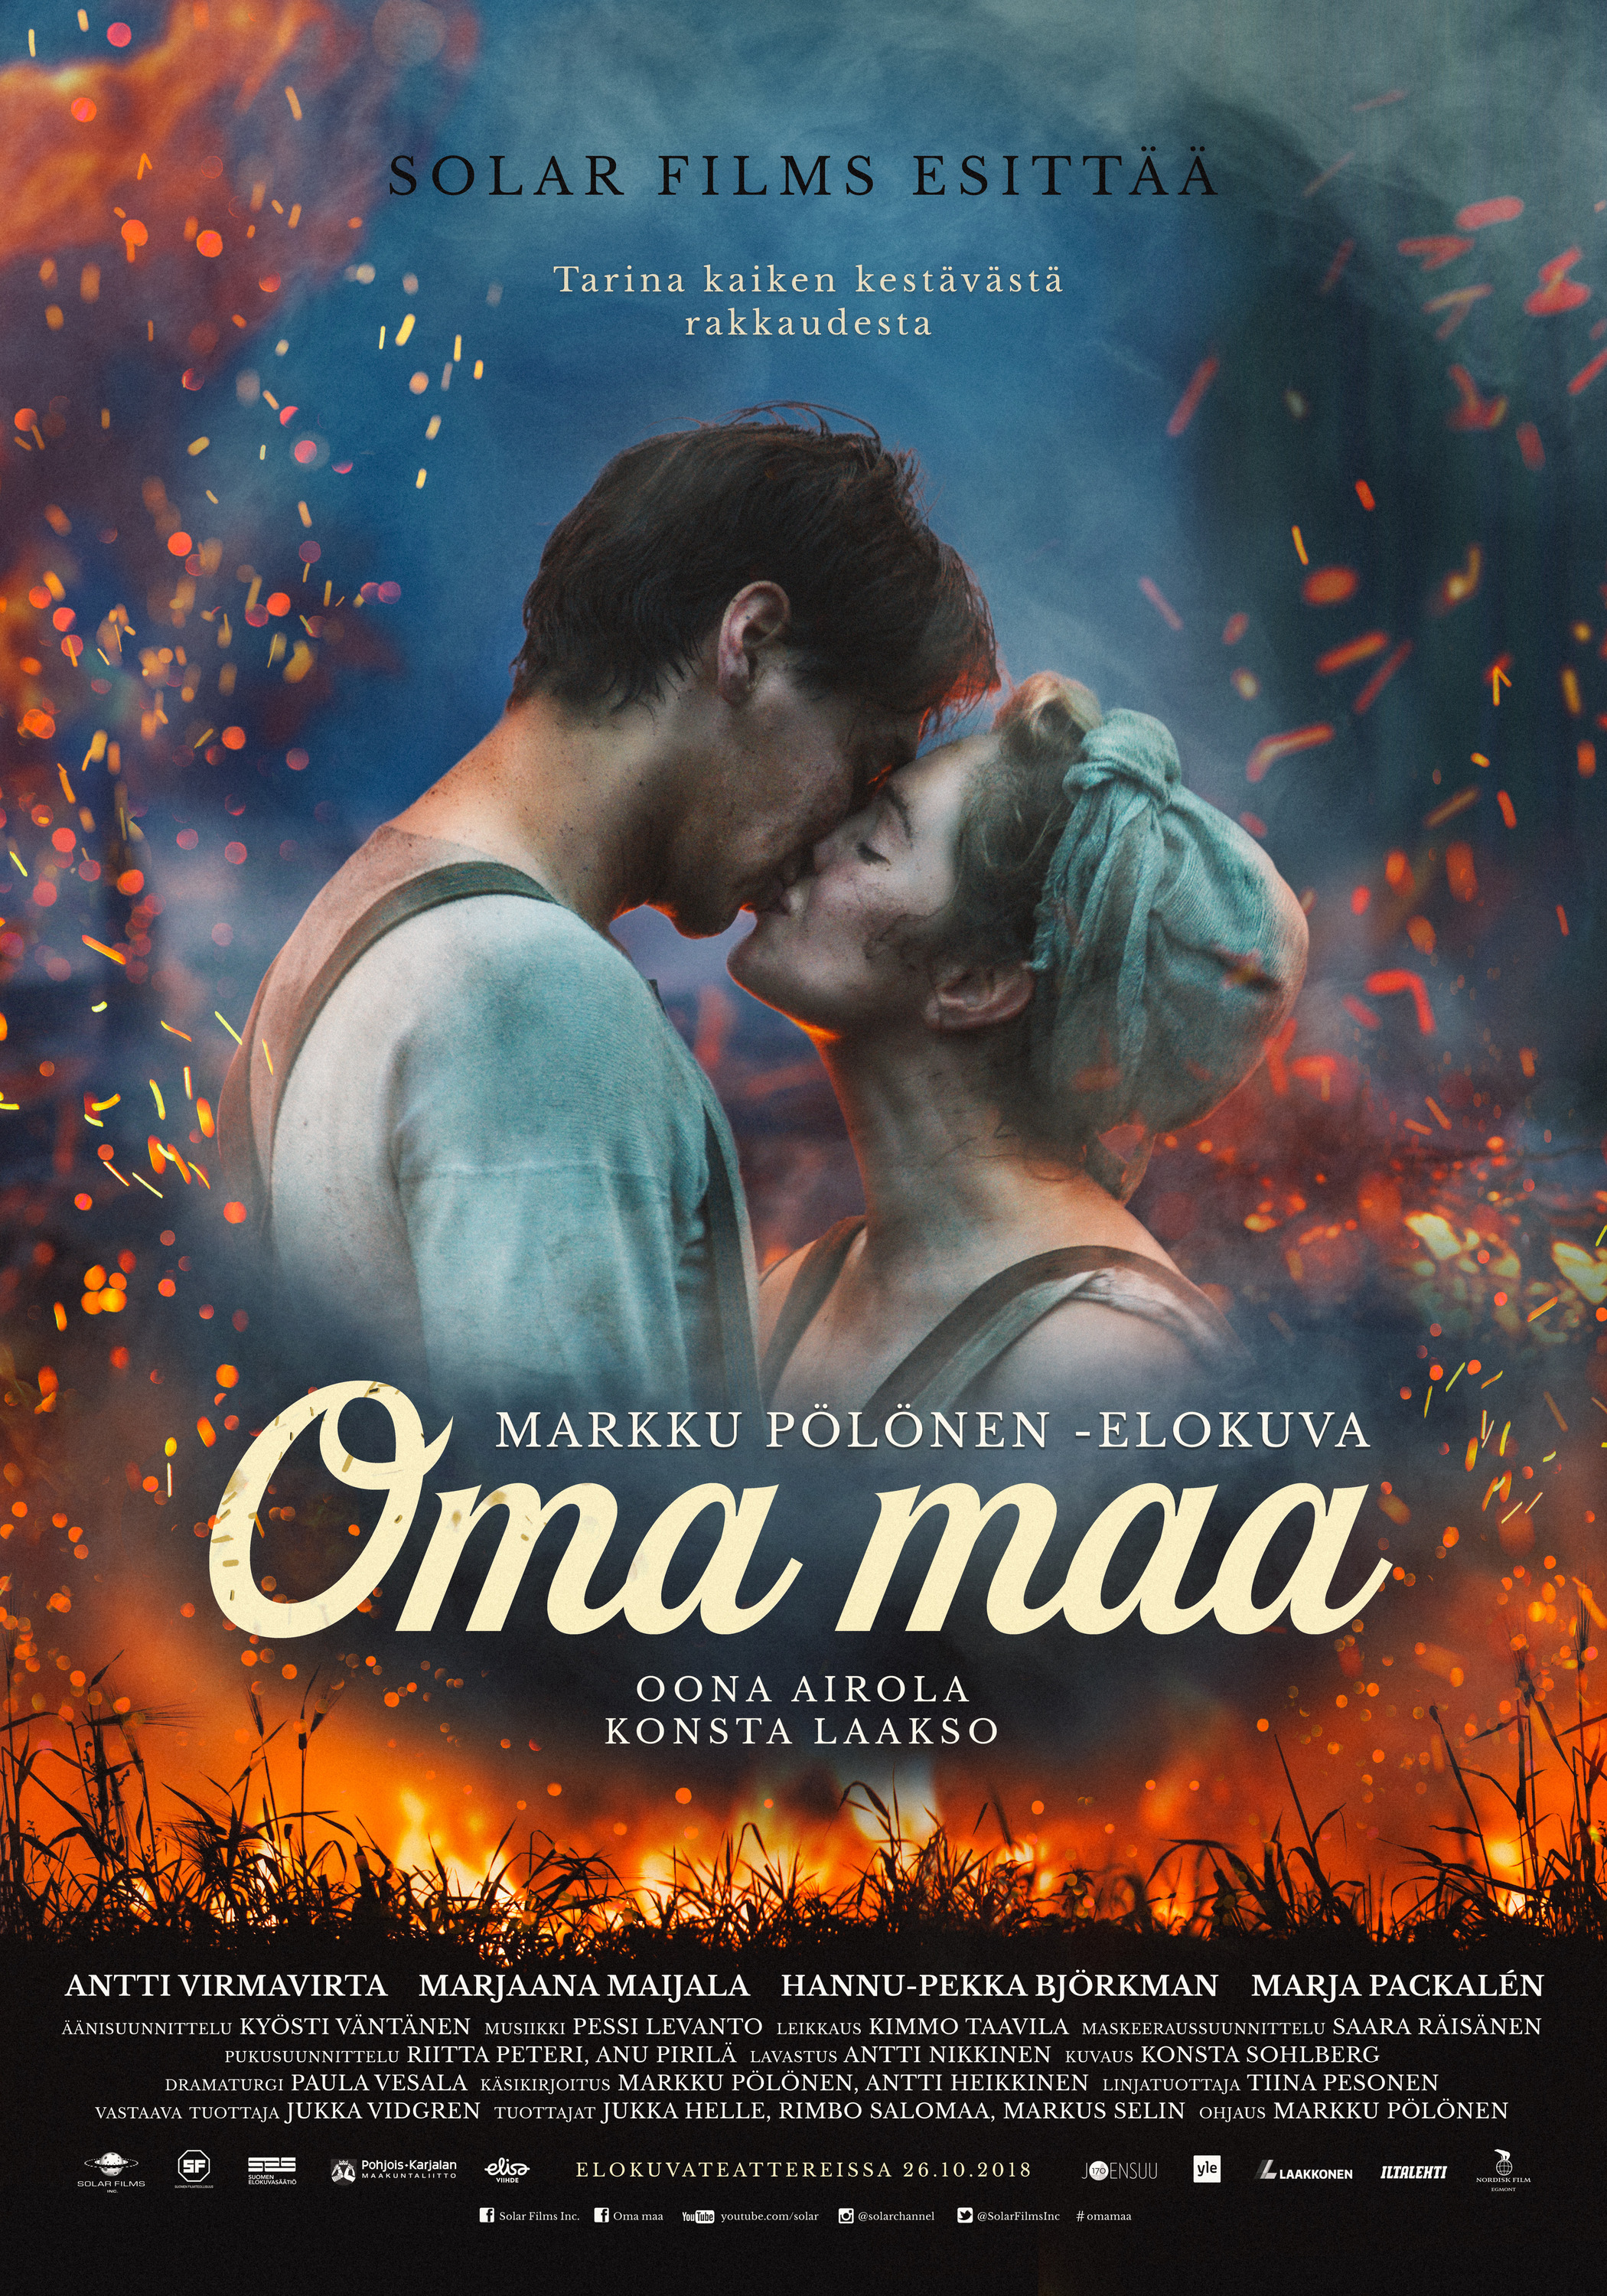 Mega Sized Movie Poster Image for Oma maa 